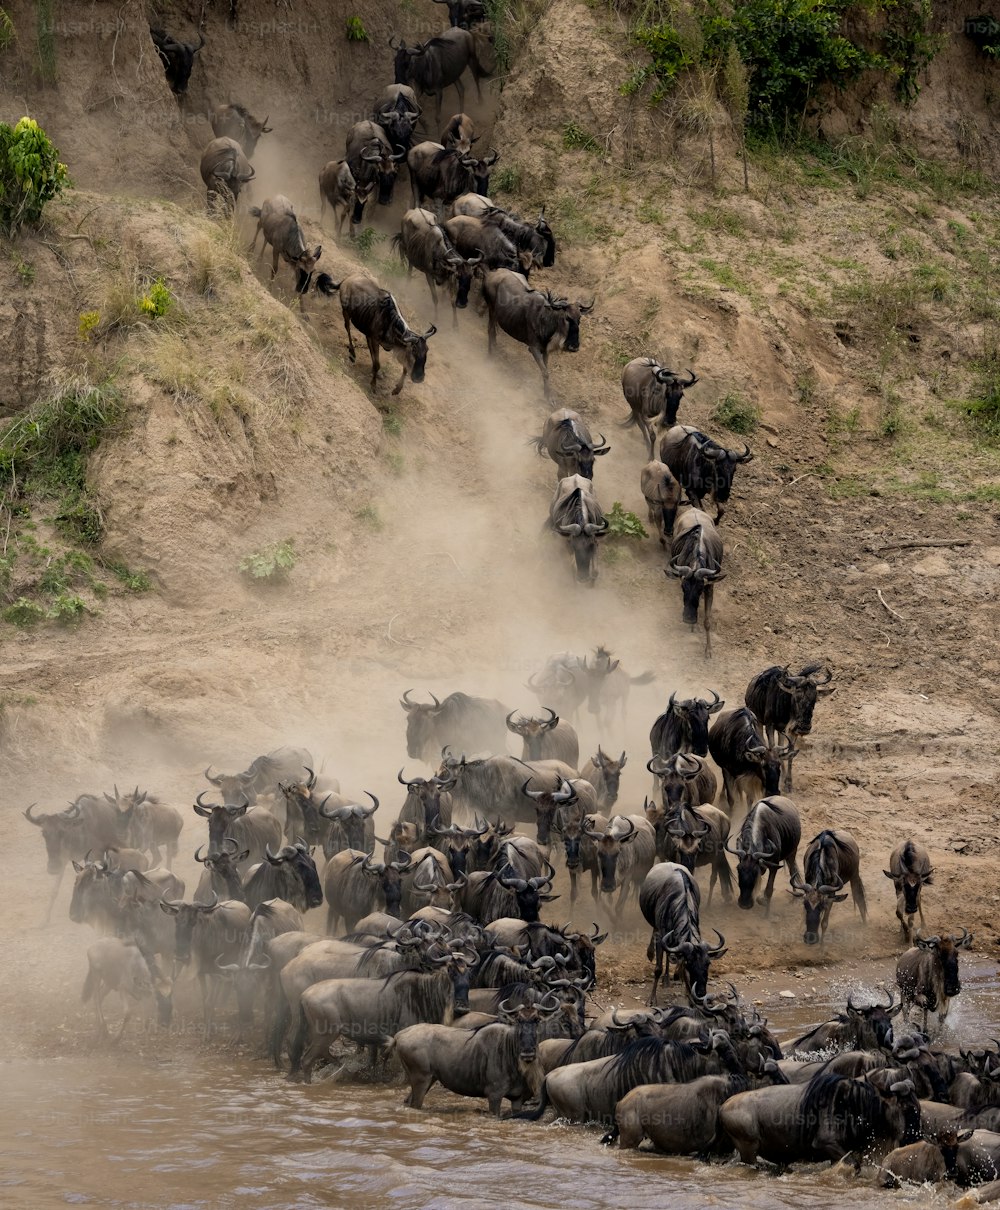 La migrazione degli gnu in Africa